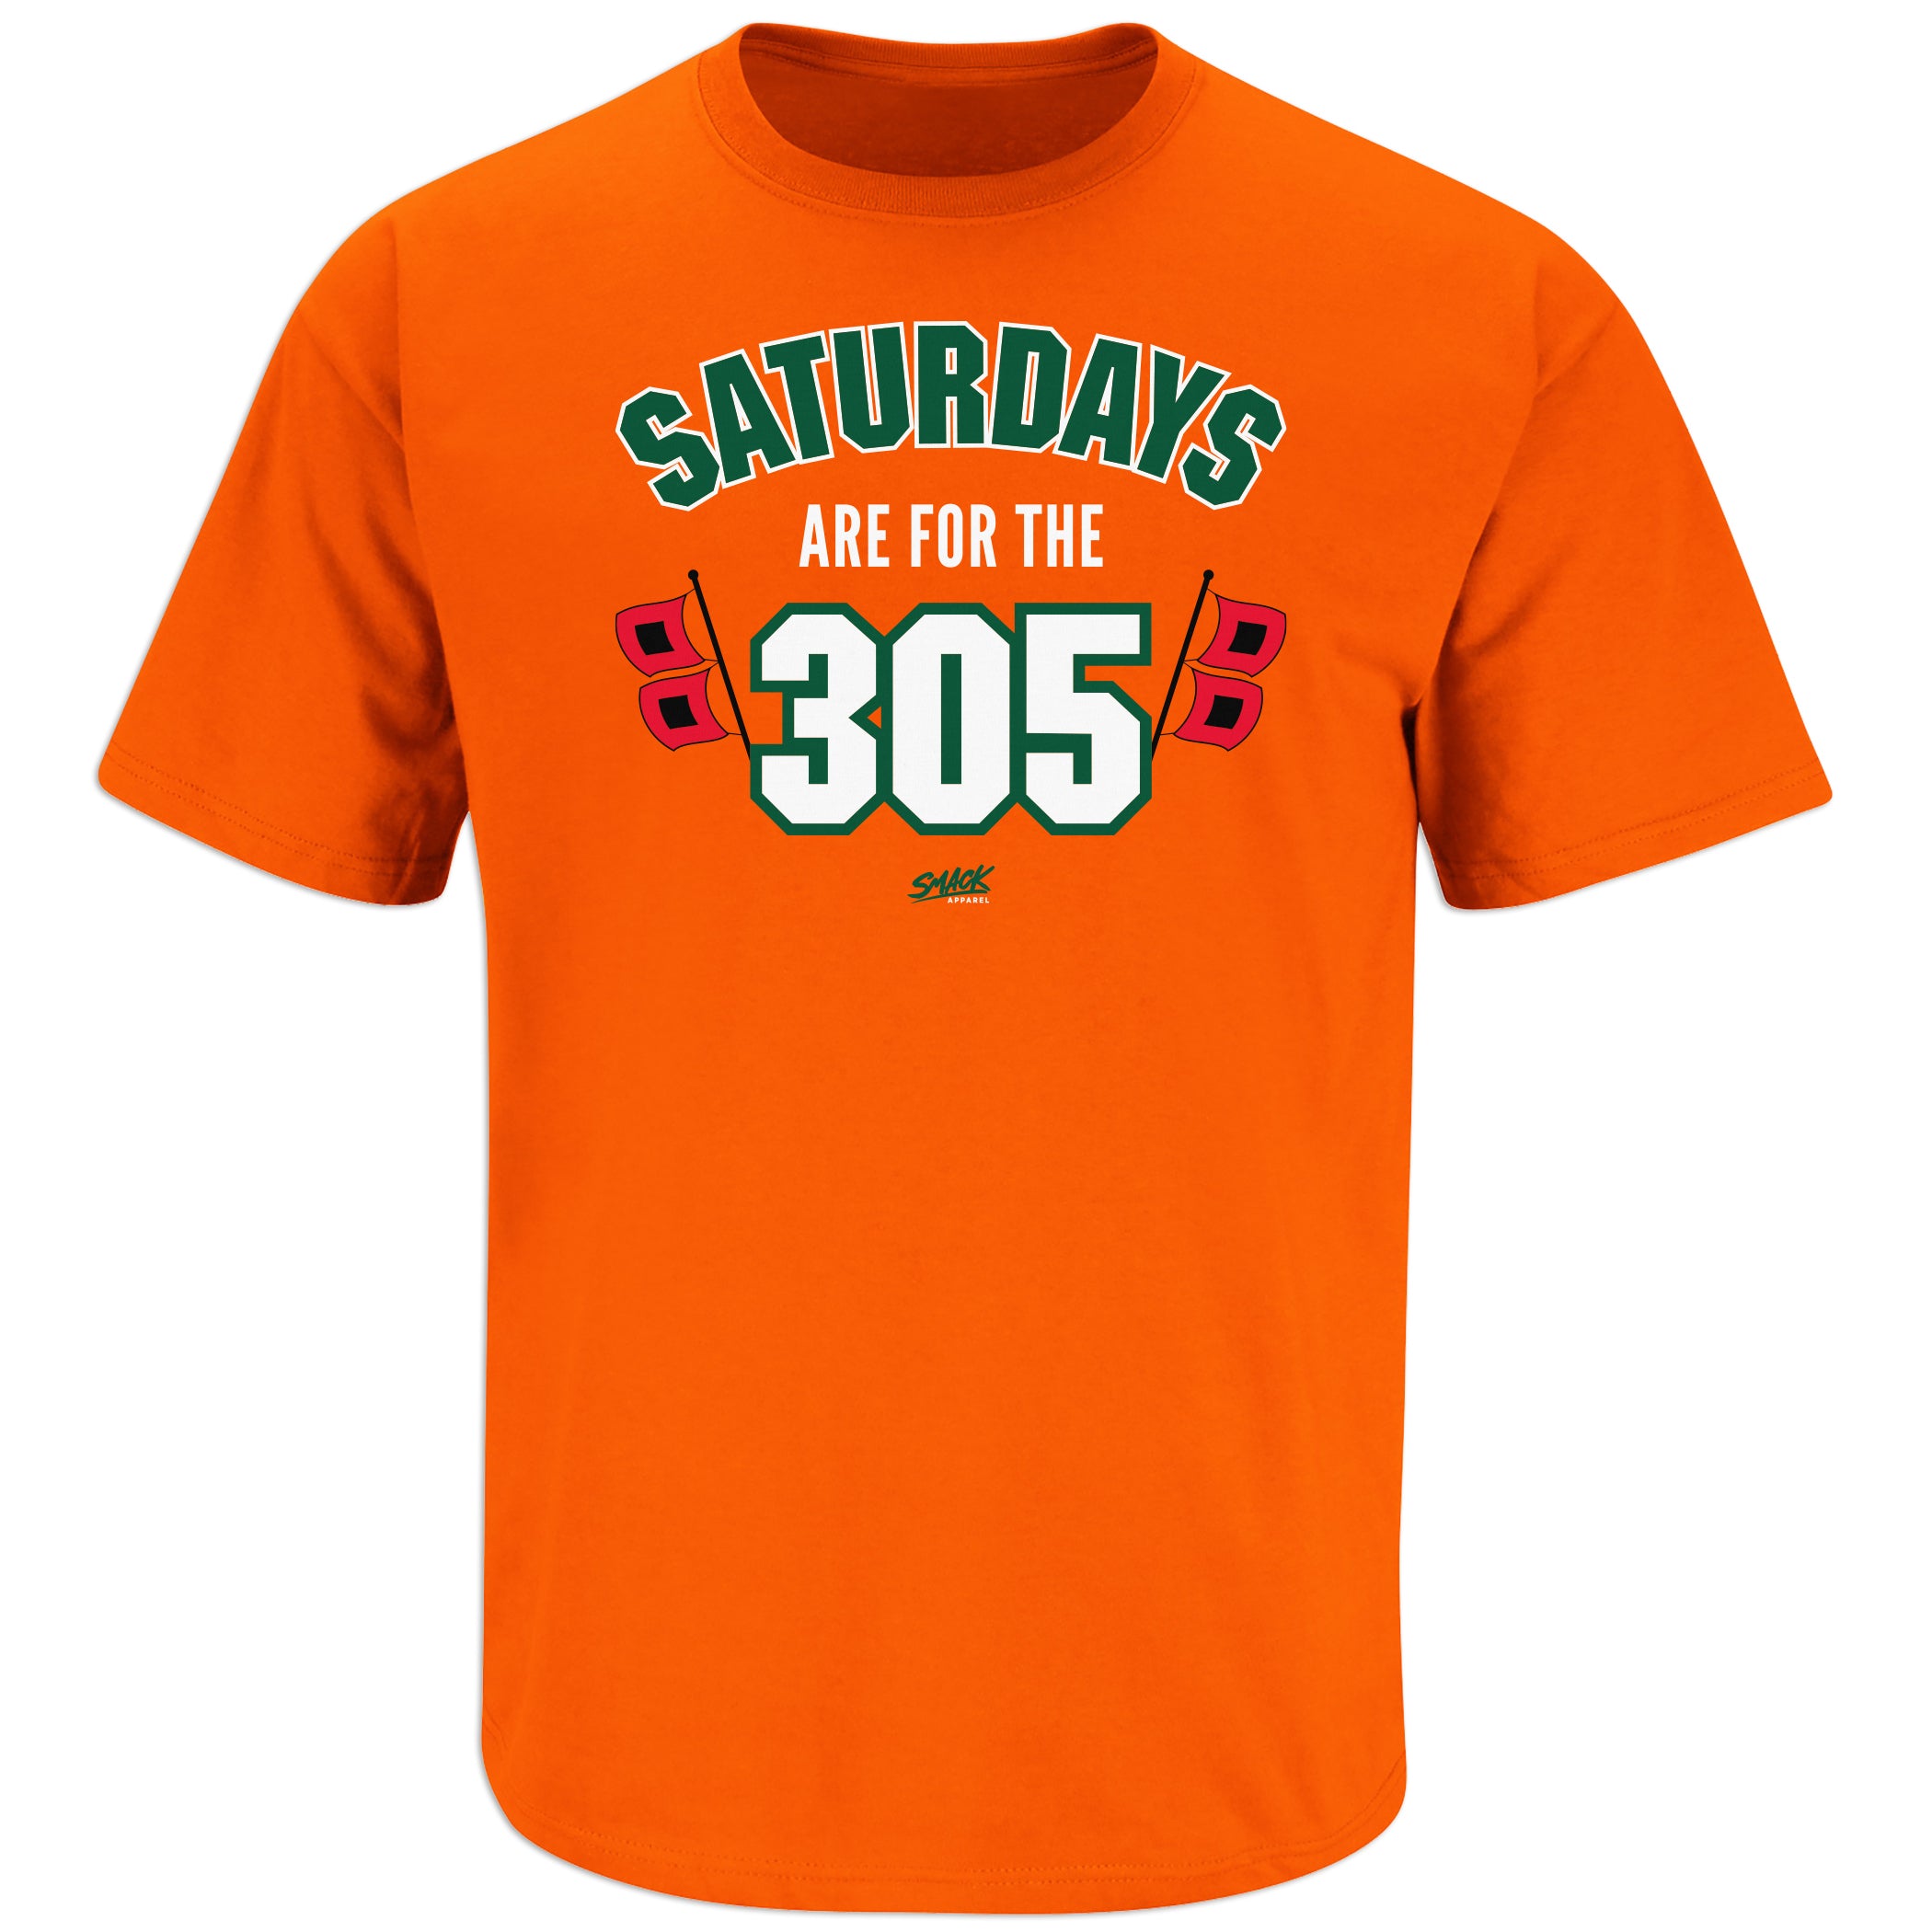 Miami Saturdays Are For The 305 T-Shirt - Orange